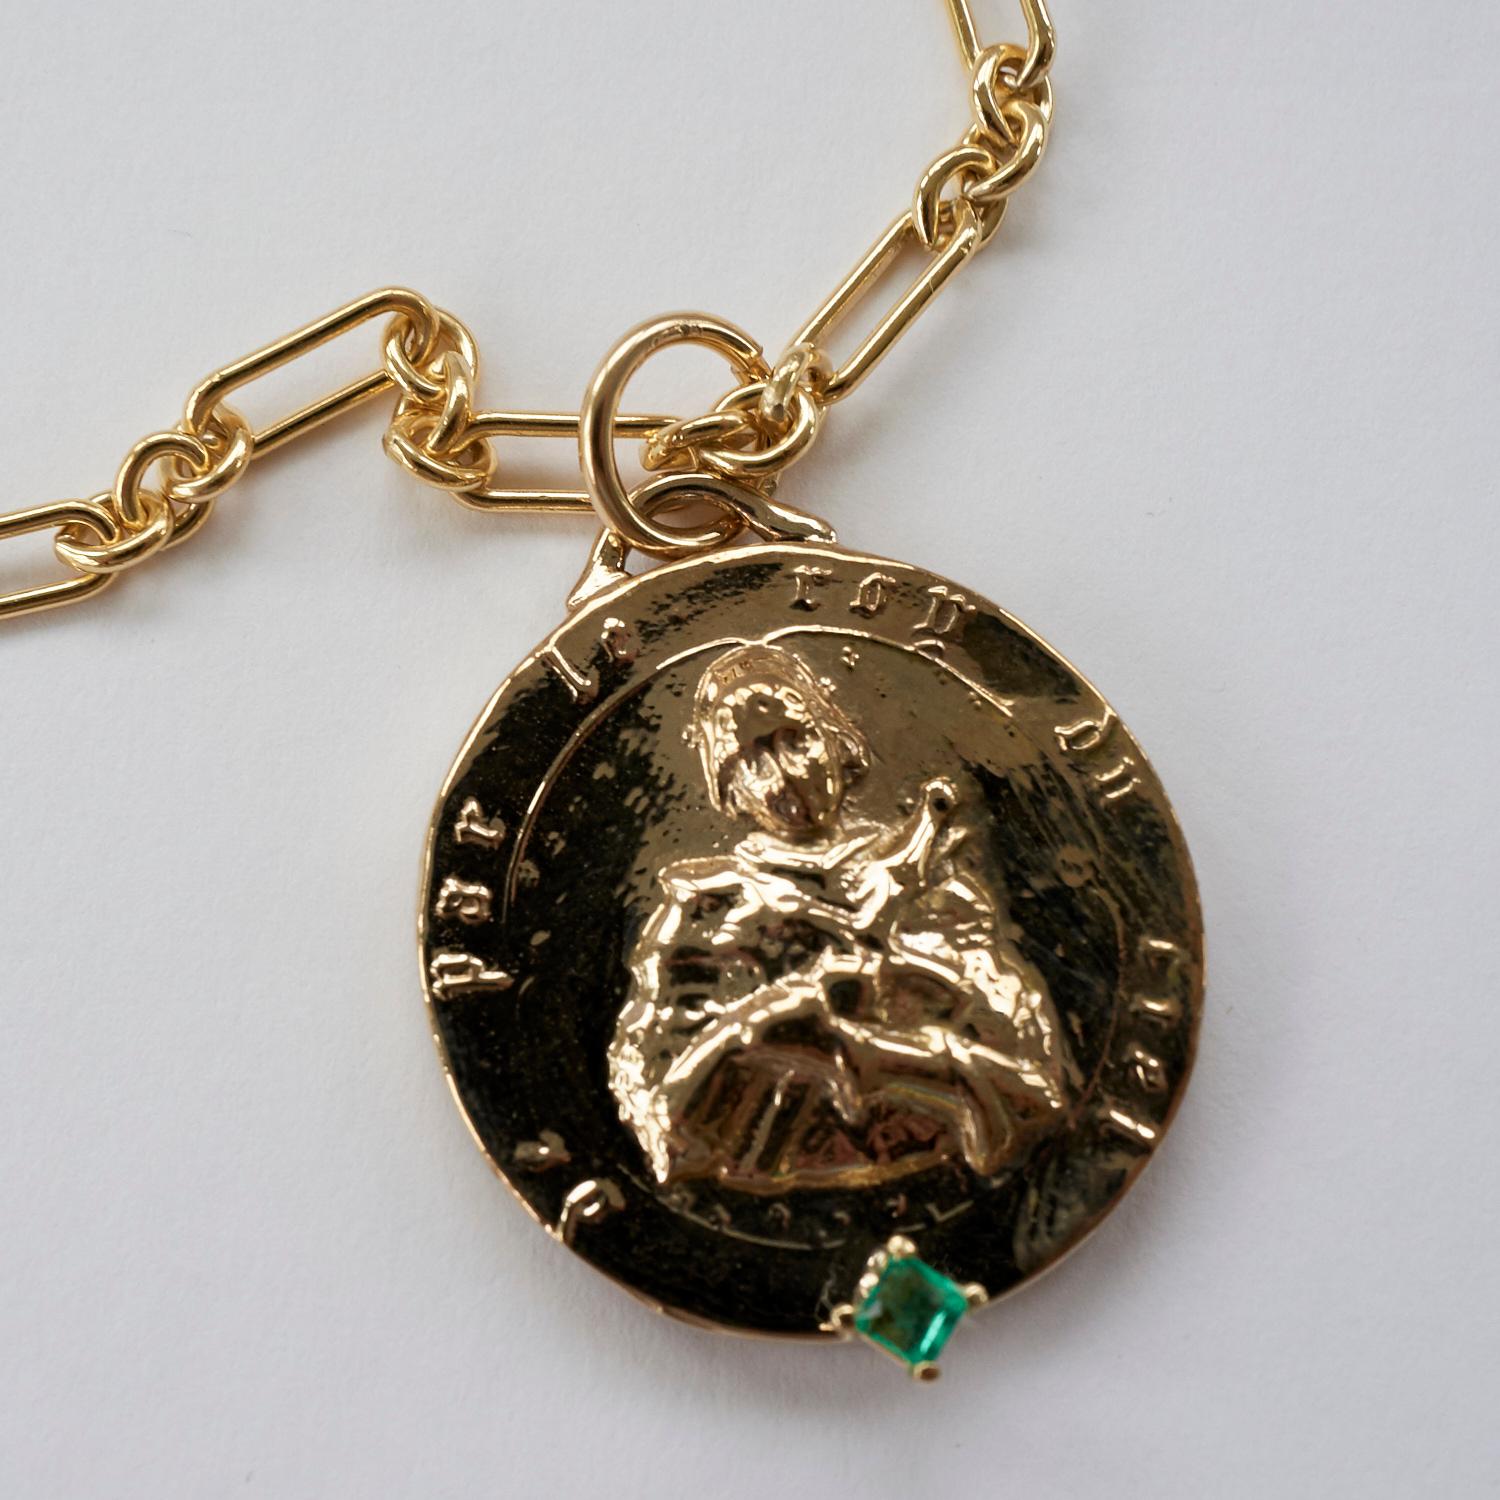 Brilliant Cut White Diamond Chain Necklace Medal Coin Pendant Joan of Arc J Dauphin